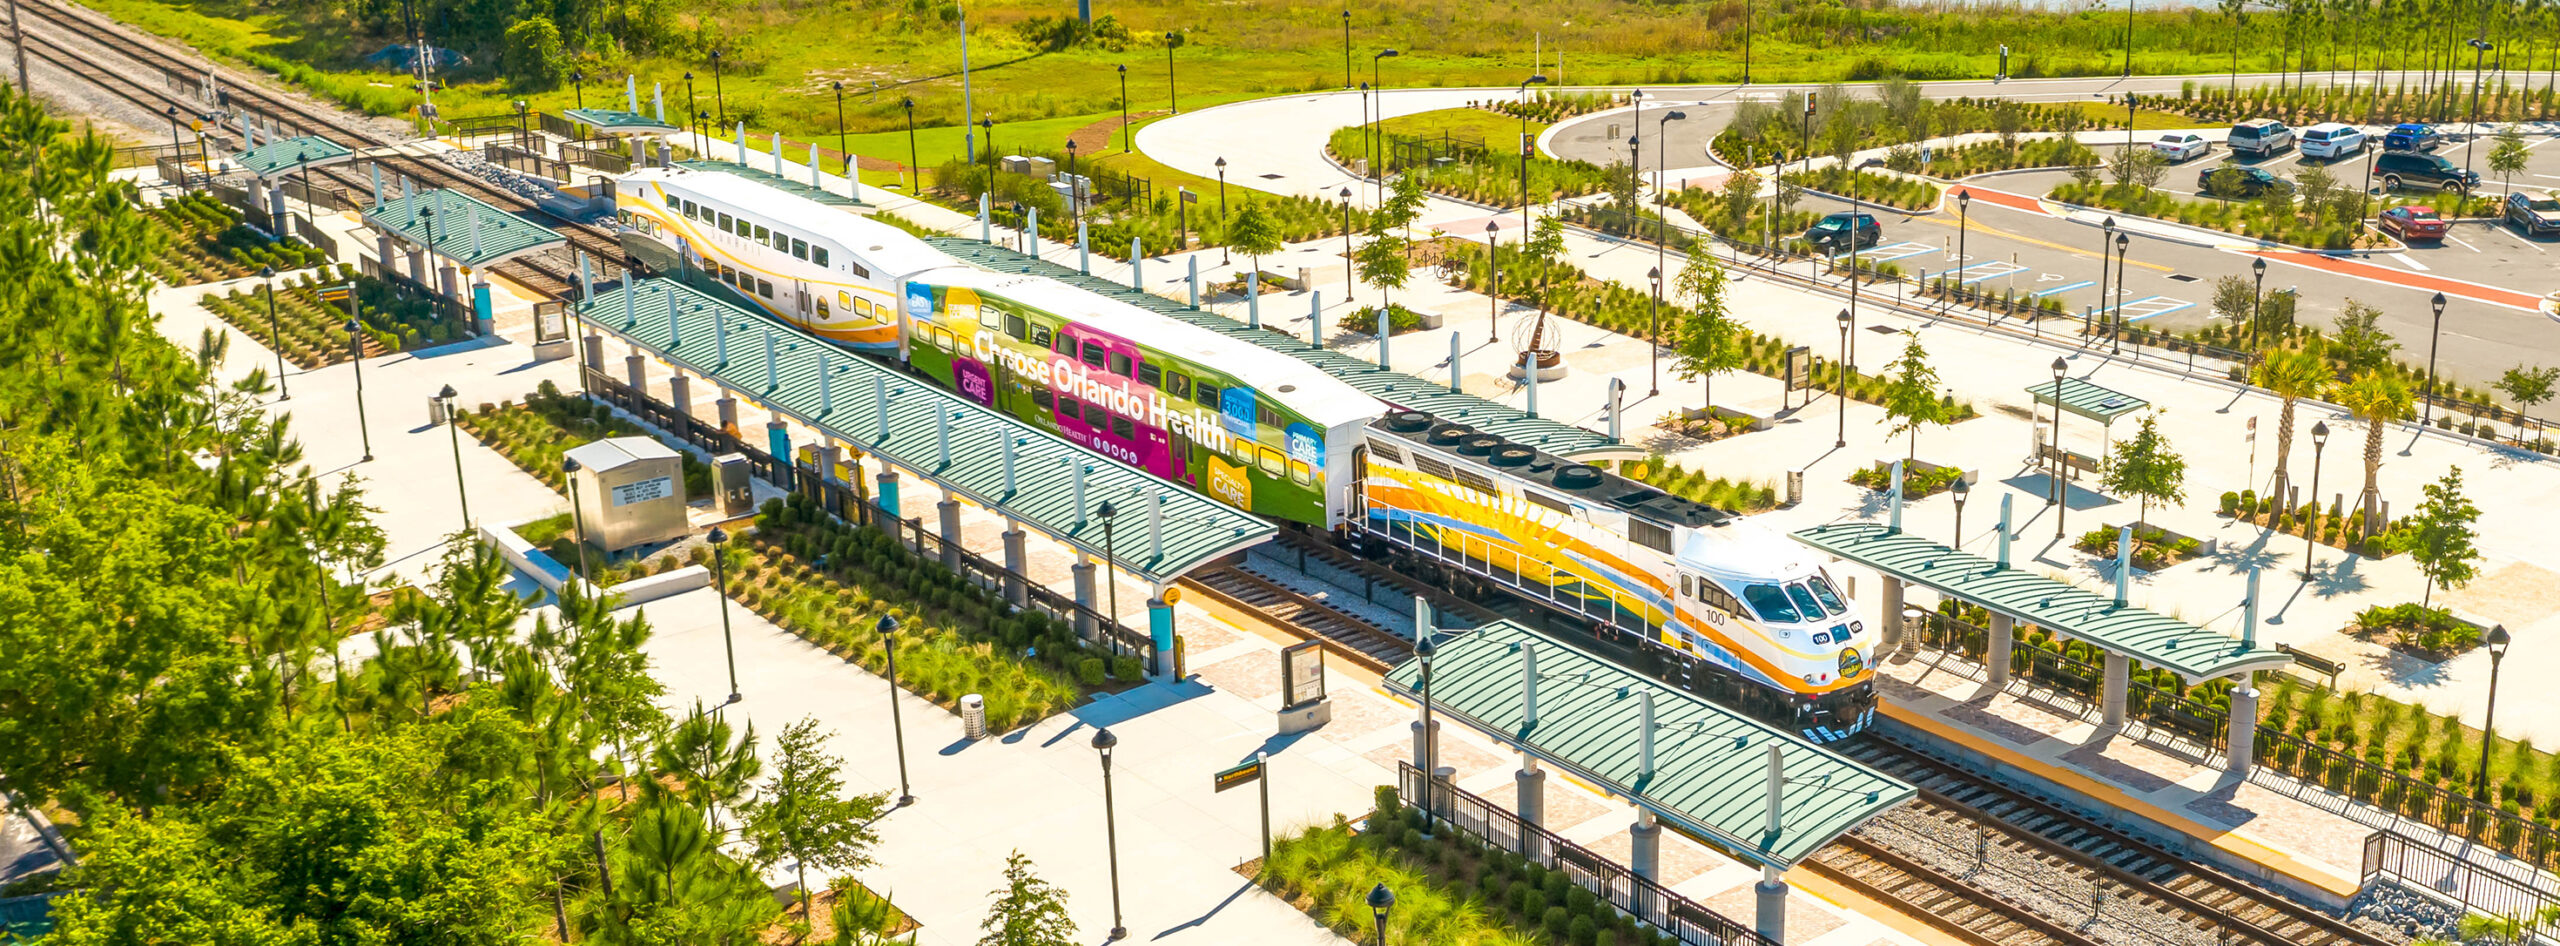 Masthead image - Aerial image of Tupperware Station and SunRail Train